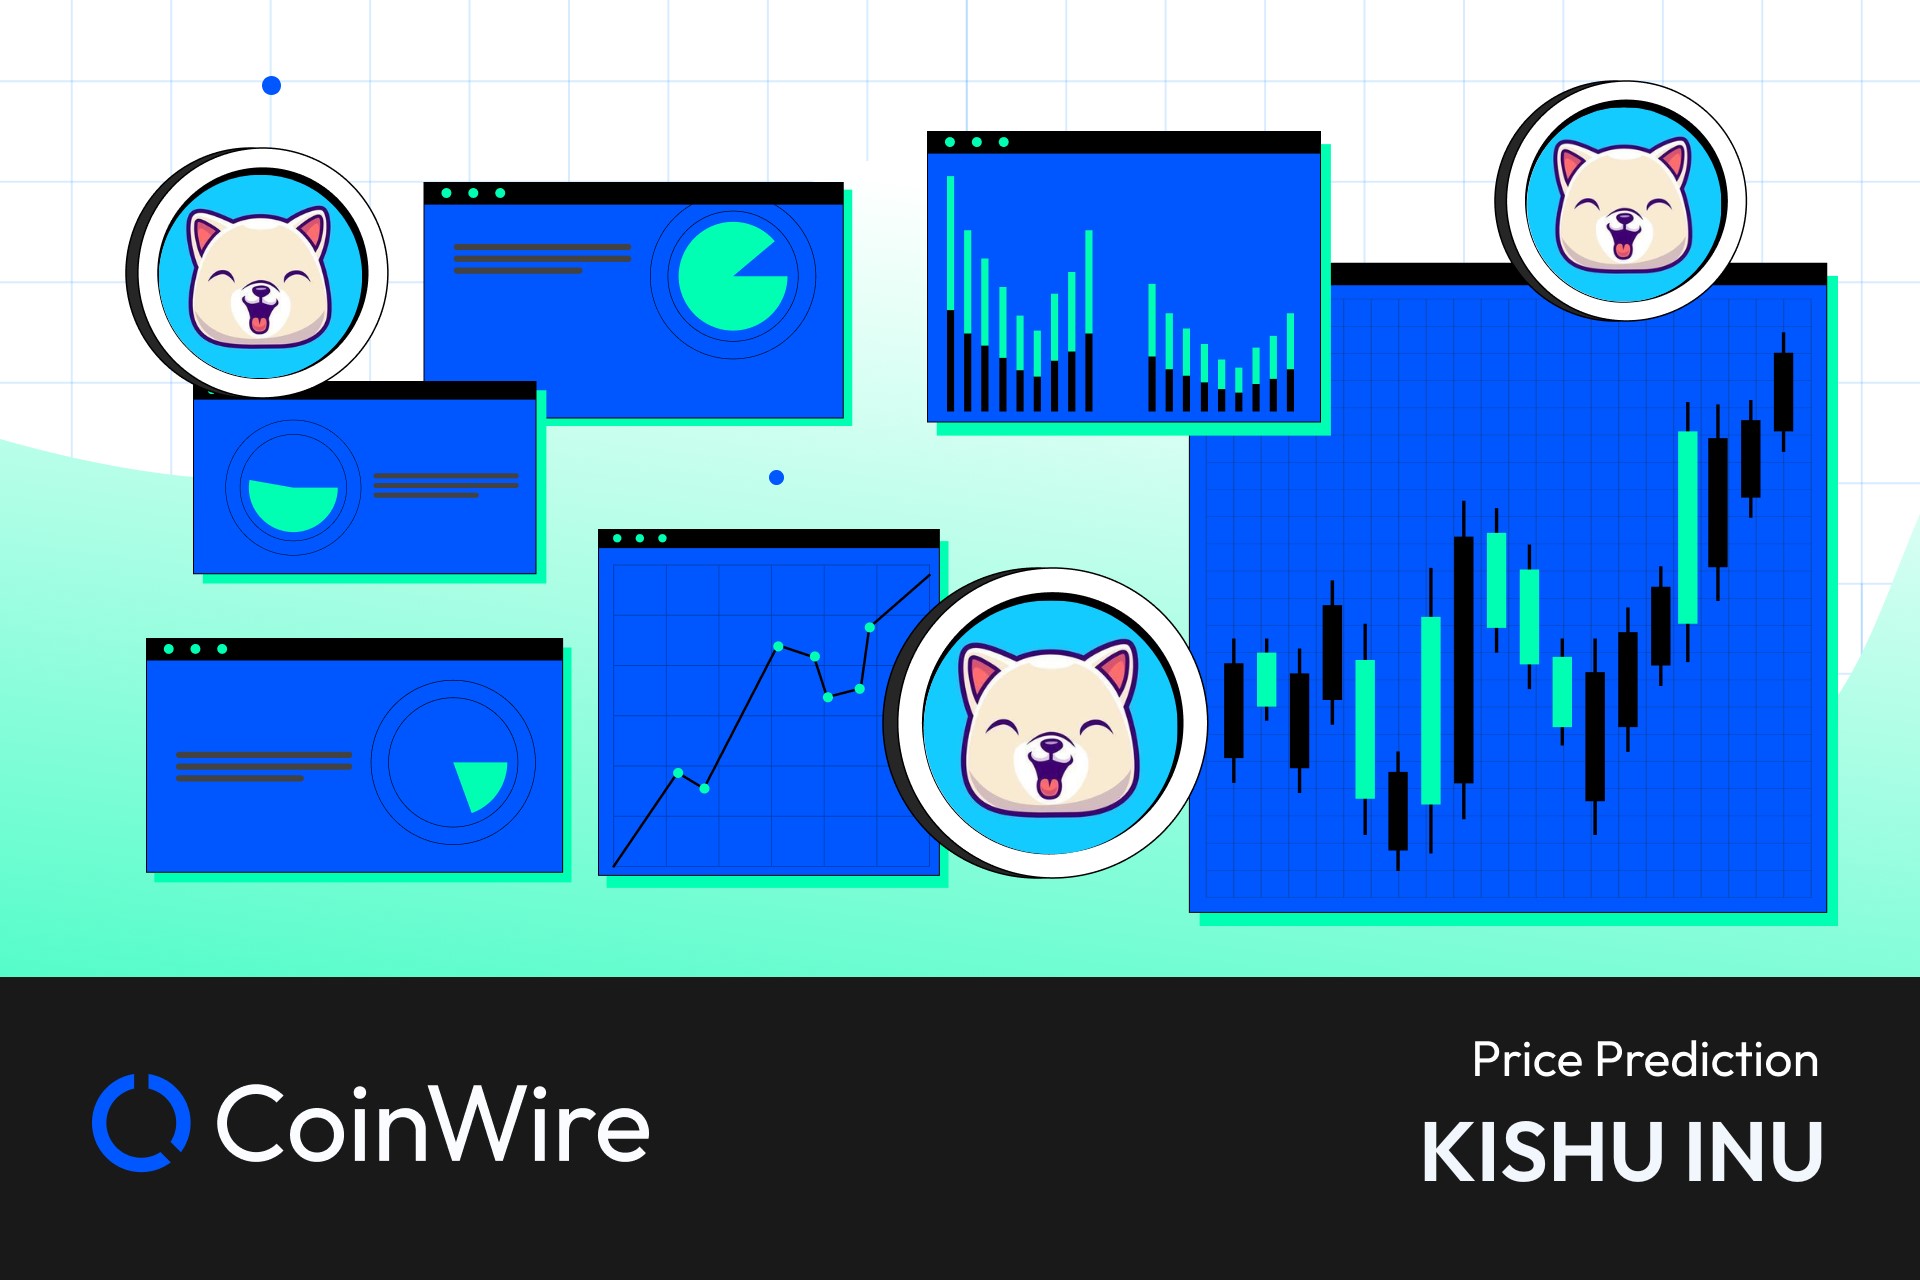 Kishu Inu Price Prediction